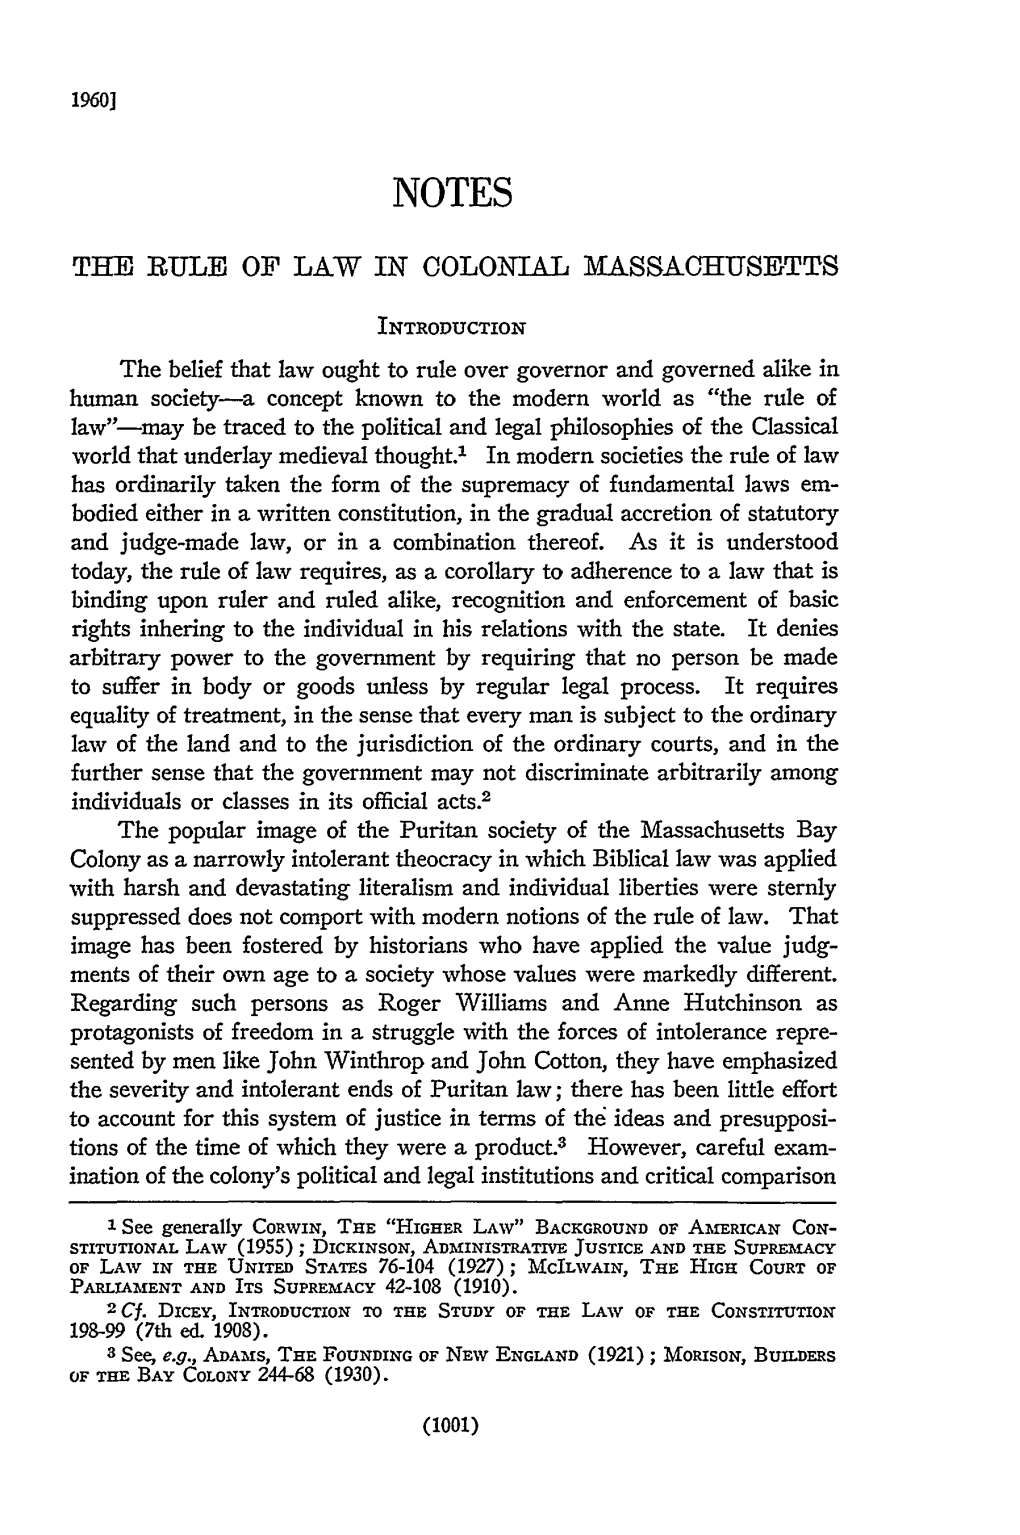 Rule of Law in Colonial Massachusetts 1003